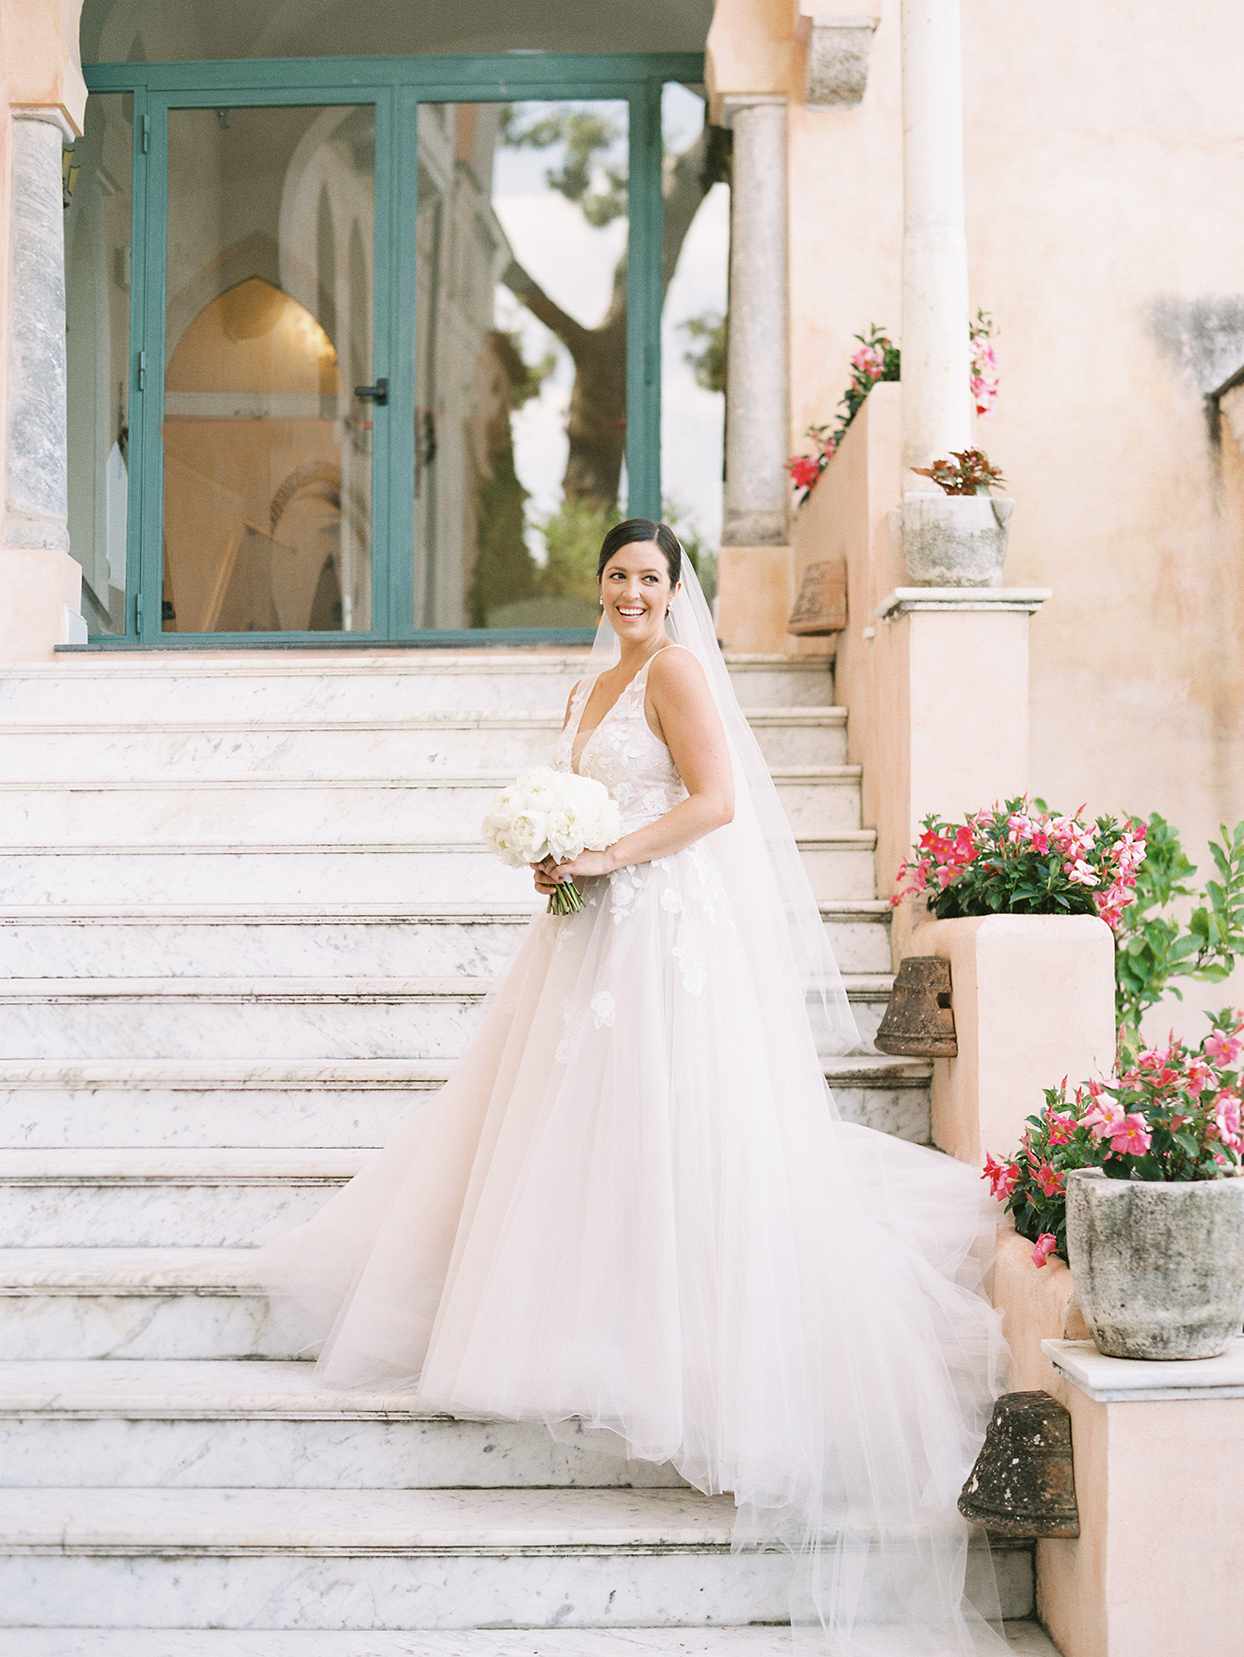 jacqueline david wedding bride on marble steps